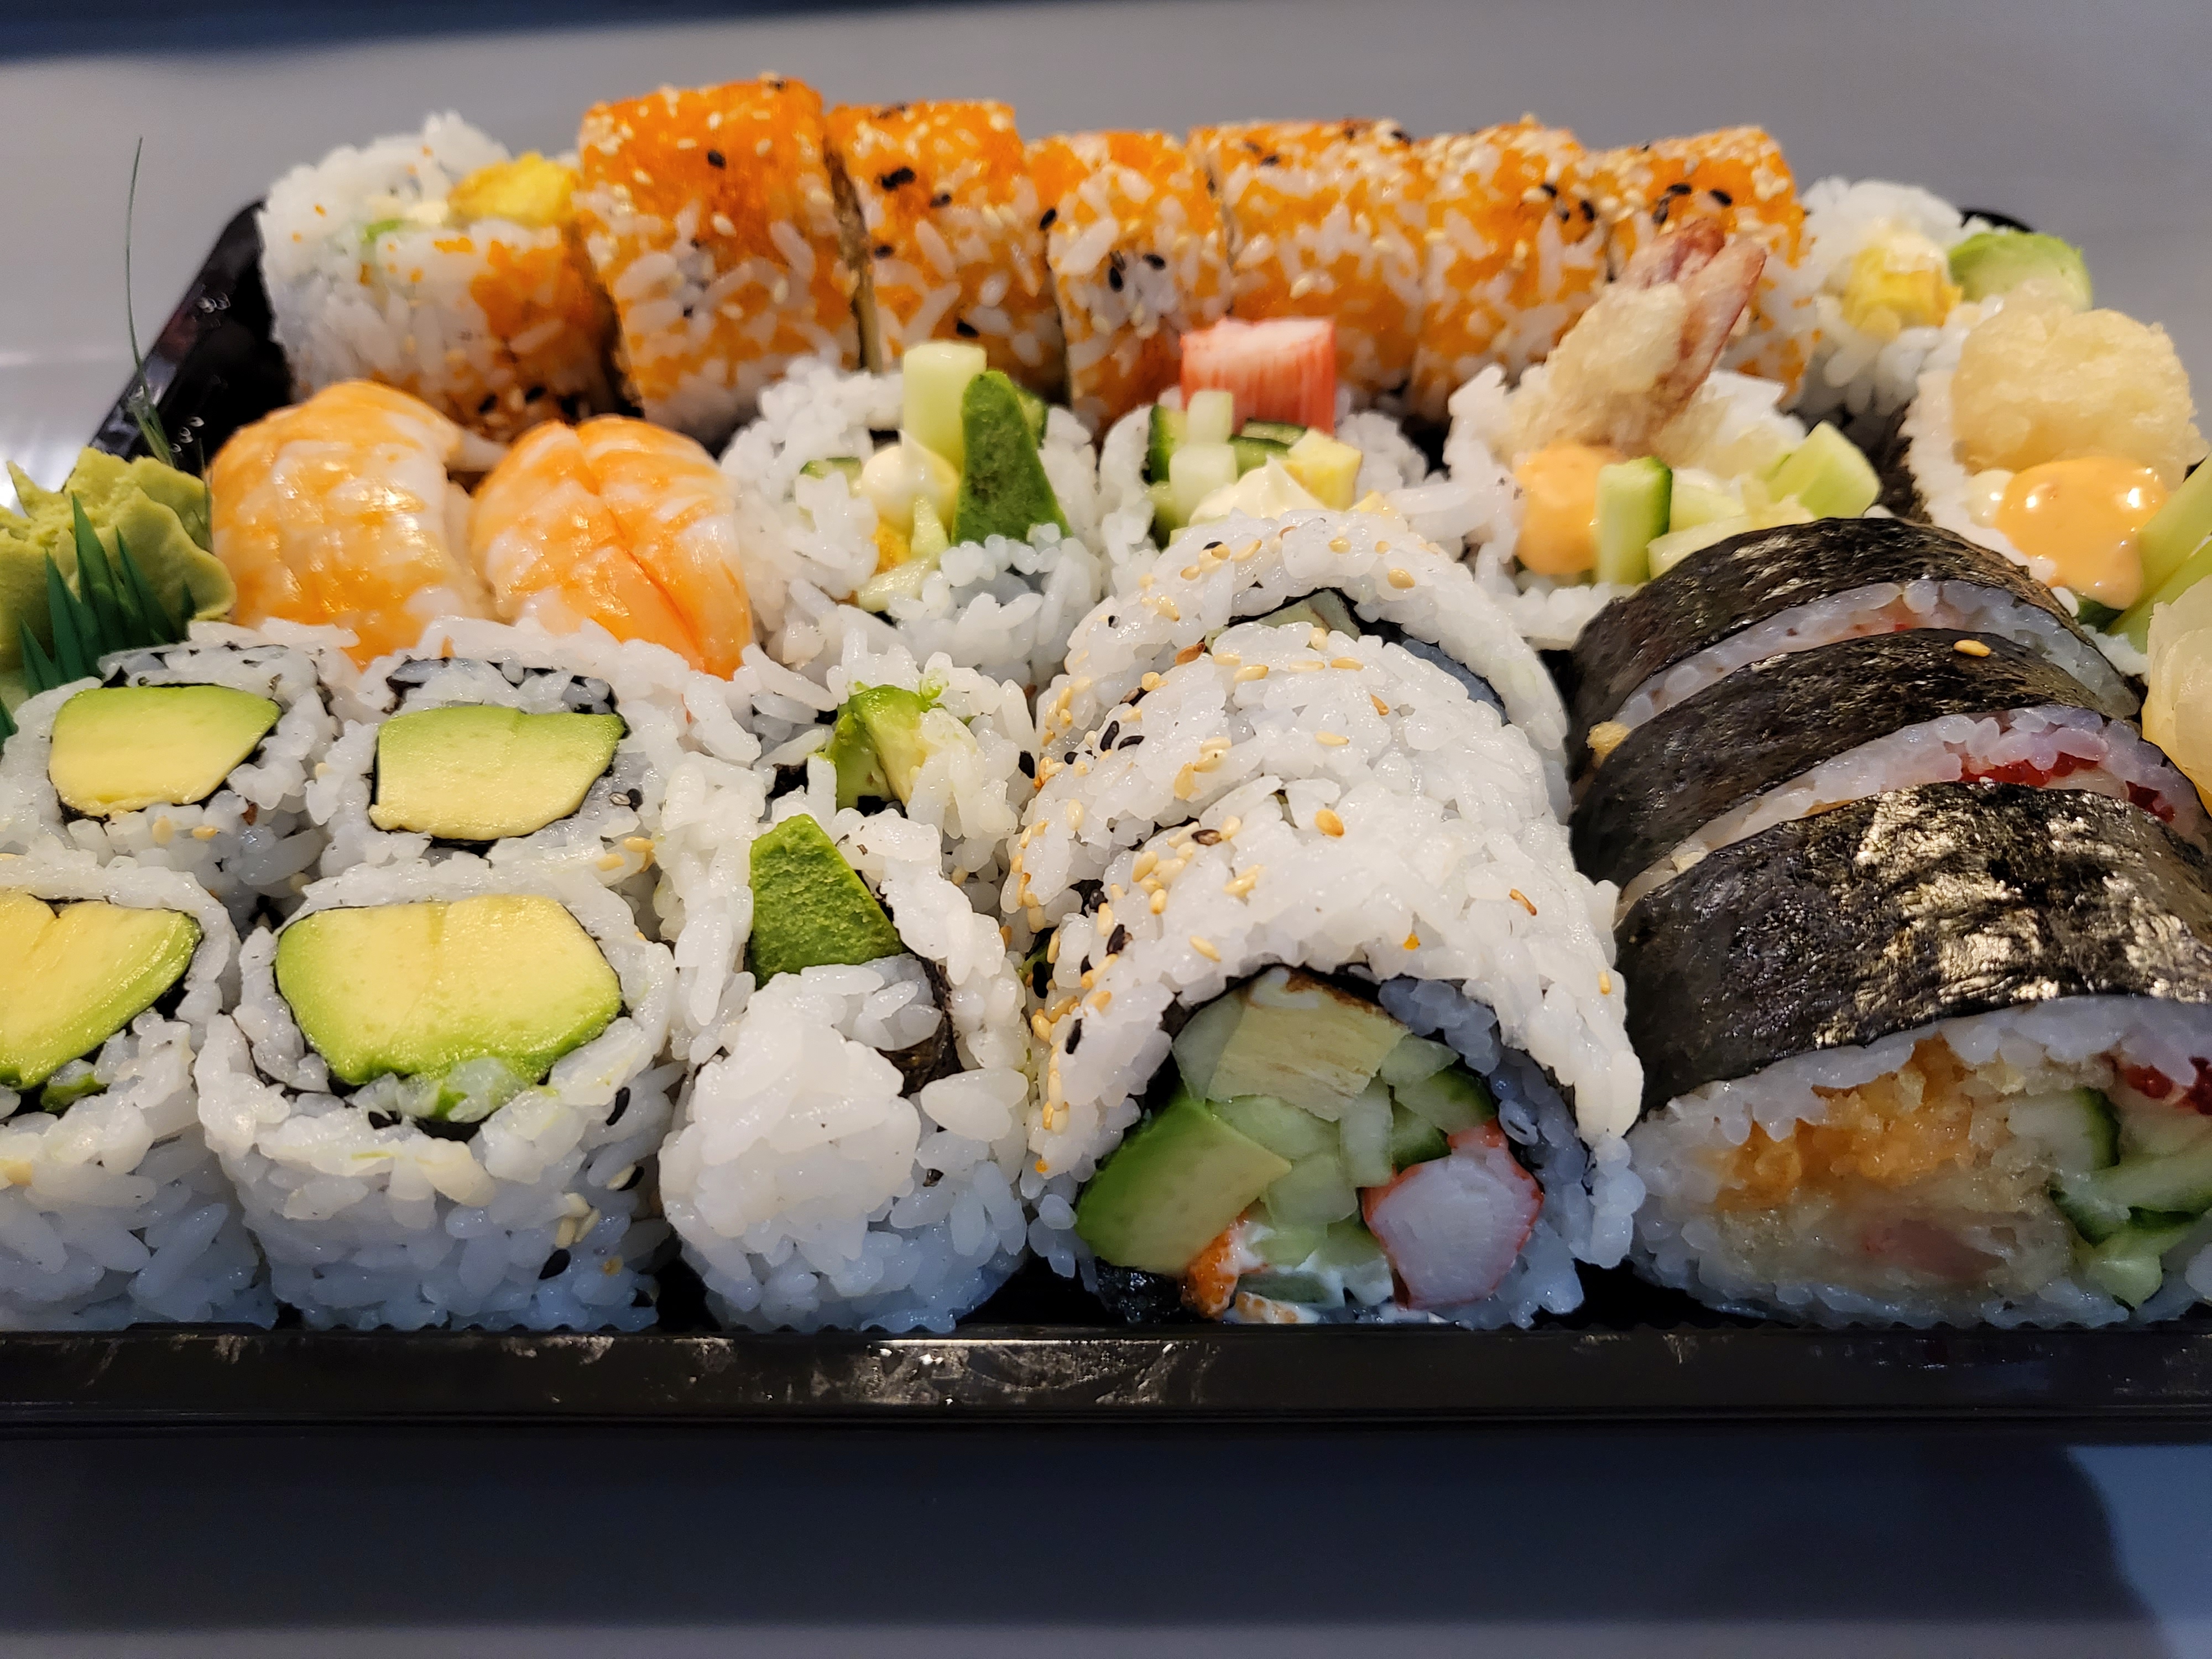 Sushi & Maki 26 morceaux (2 pers) #102+ / open special sushi & maki combo